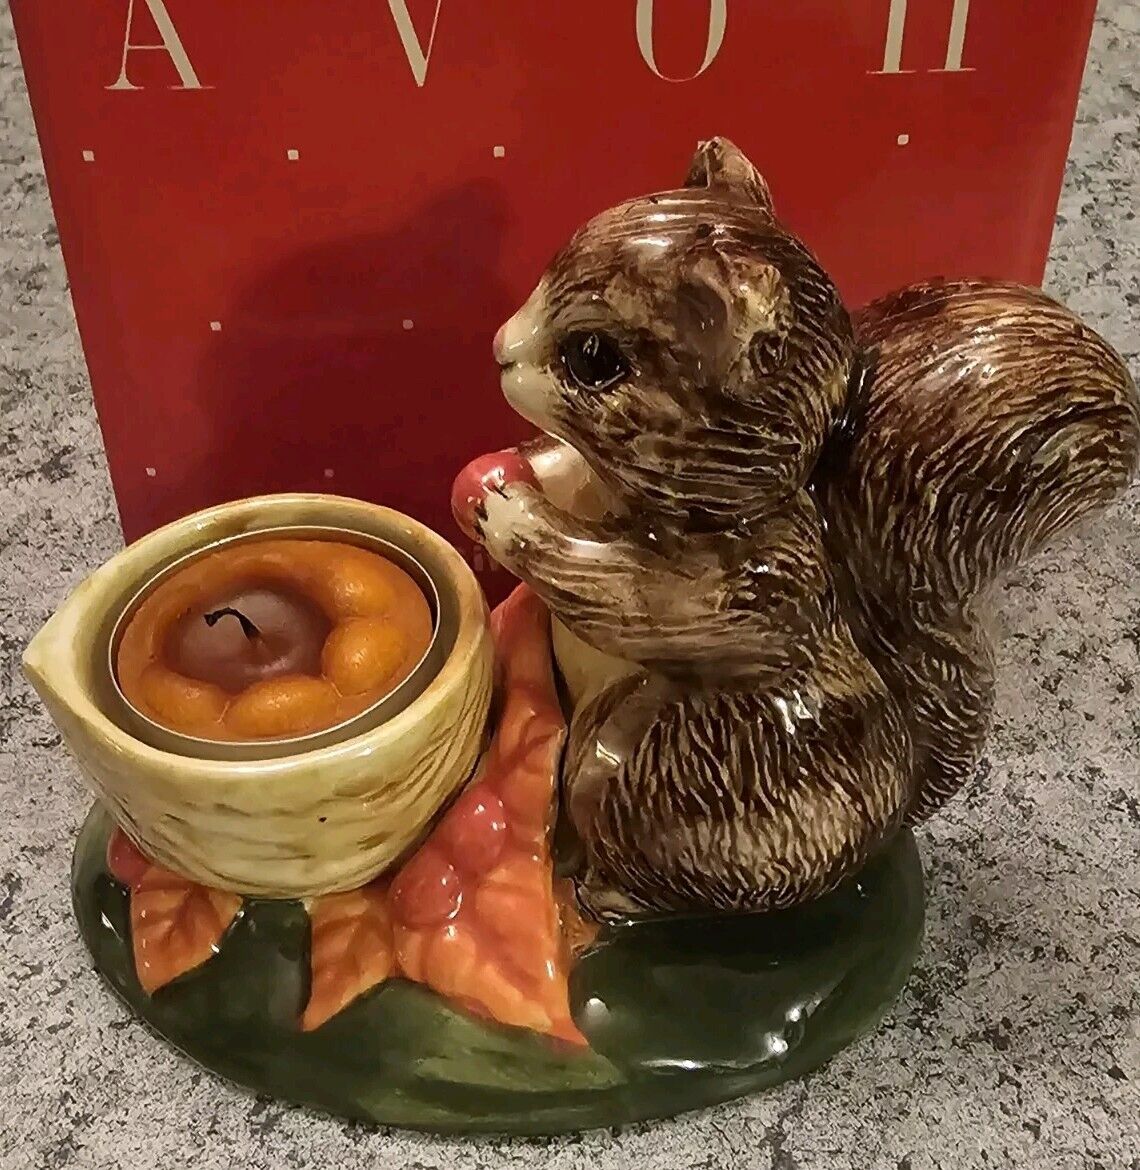 Vintage AVON Natures Friend Squirrel Candle Holder Hand Painted Ceramic Tealite 